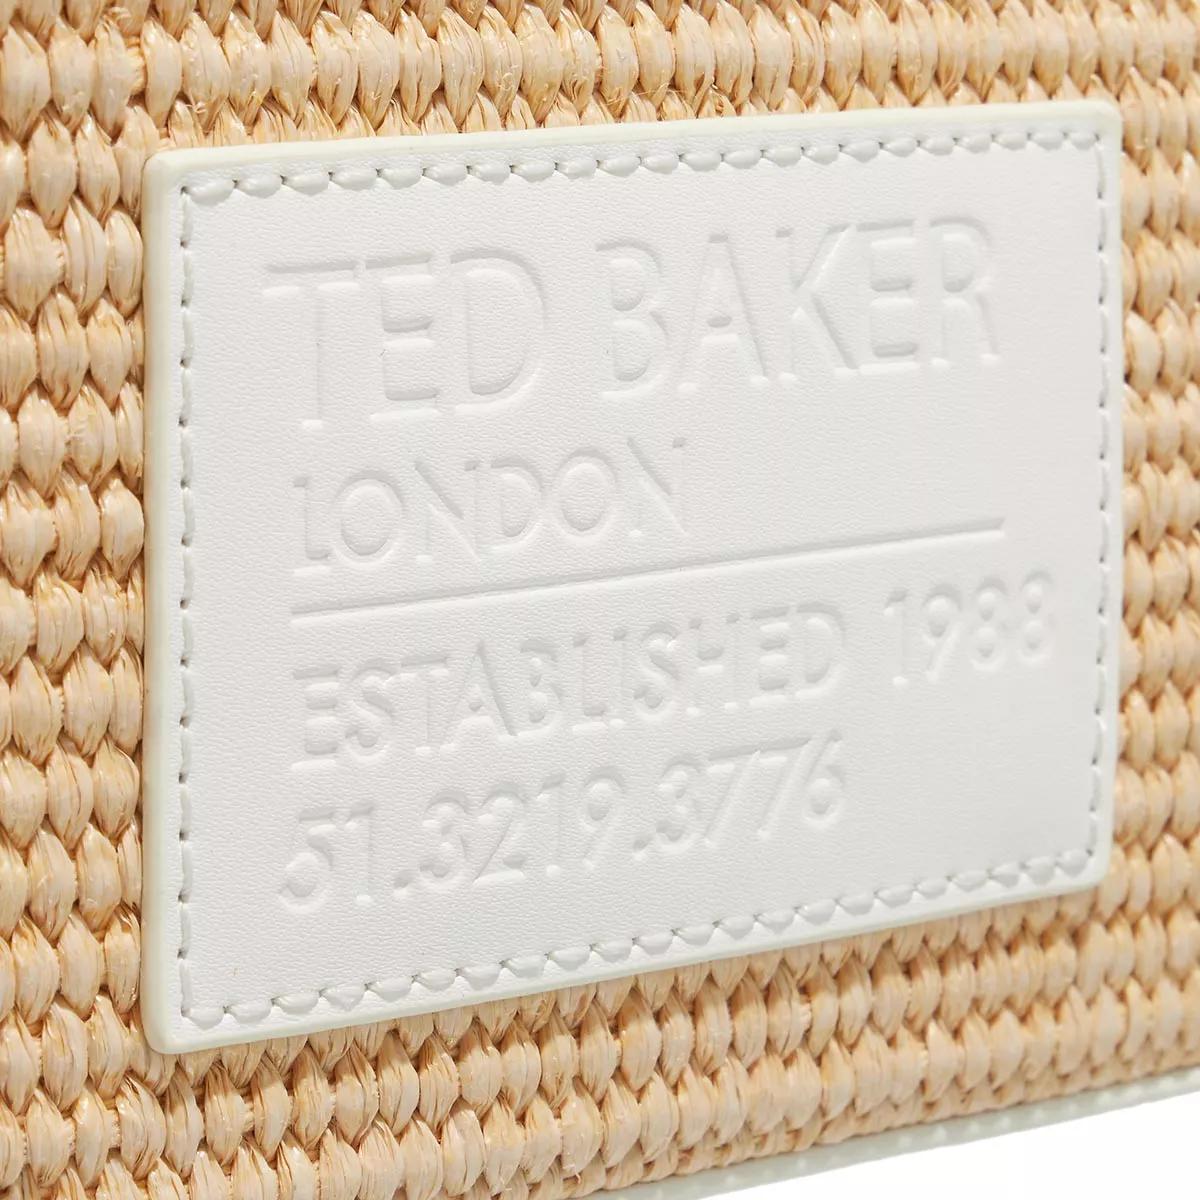 Ted Baker Stello Branded Webbing Raffia Camera Cross Body Bag,  White/Natural at John Lewis & Partners